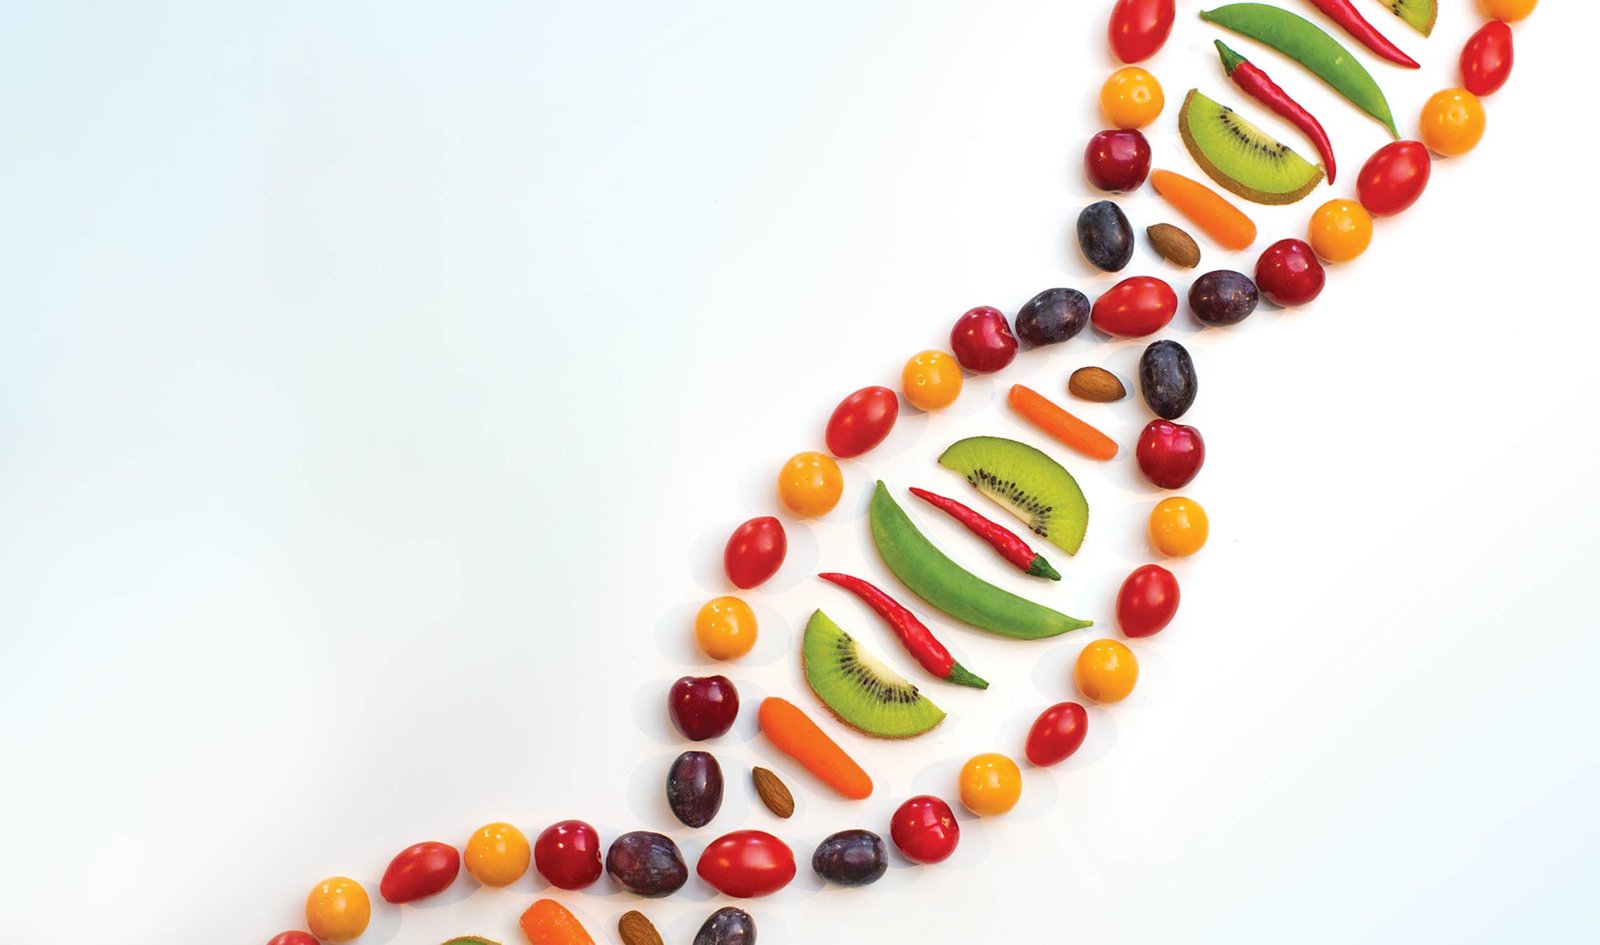 Gene Box looks at nutrigenomics revolutinizing wellness industry